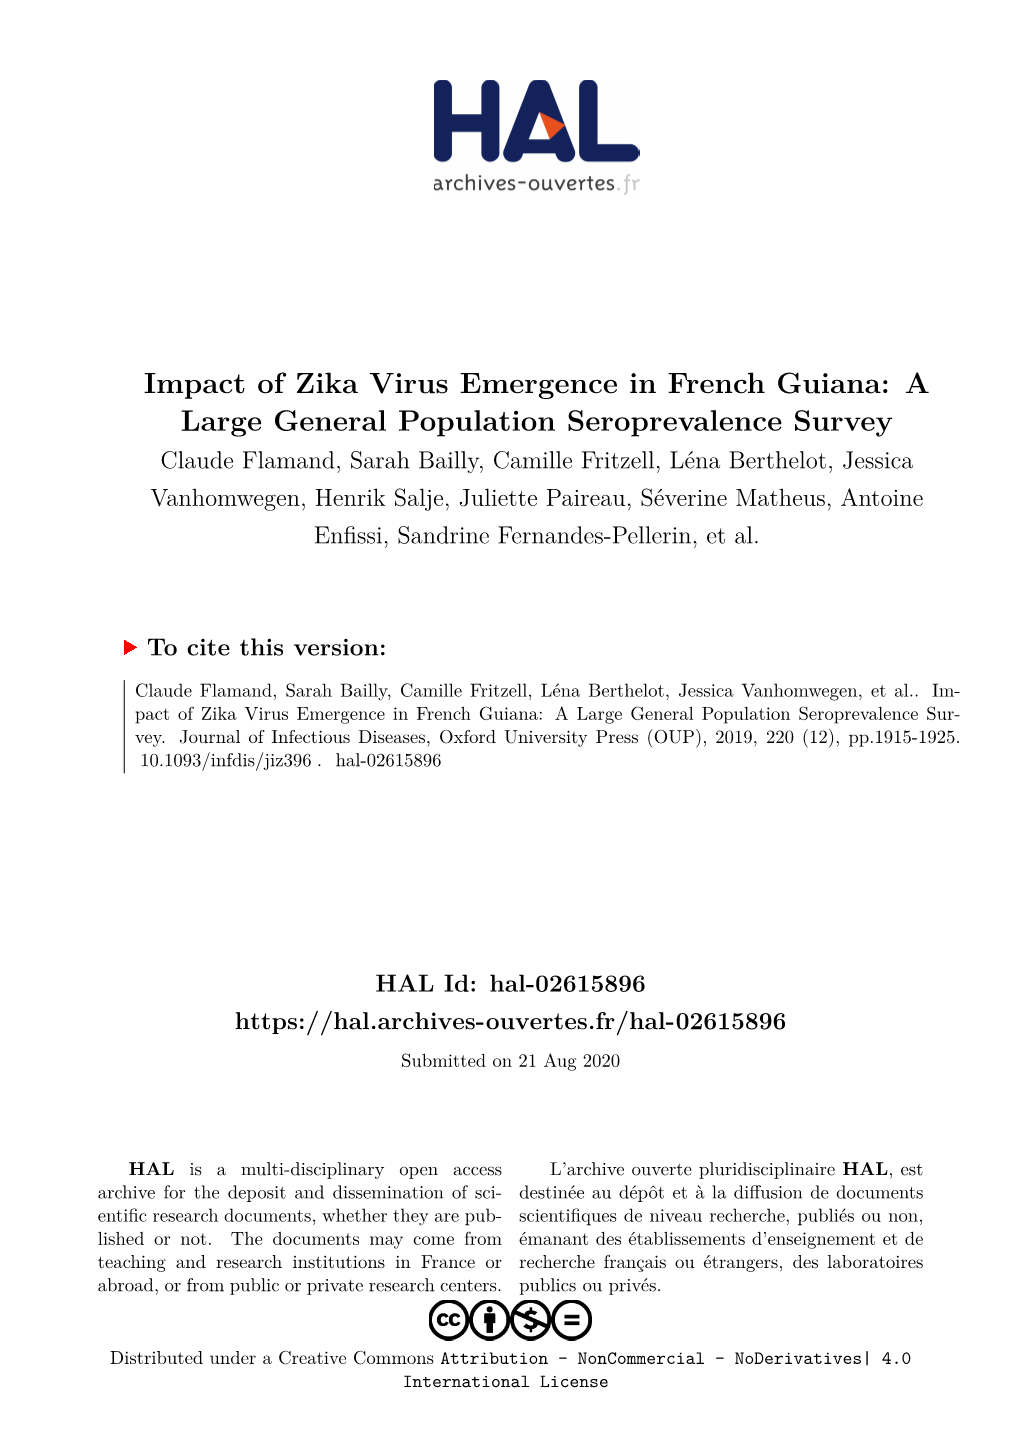 Impact of Zika Virus Emergence in French Guiana: a Large General Population Seroprevalence Survey